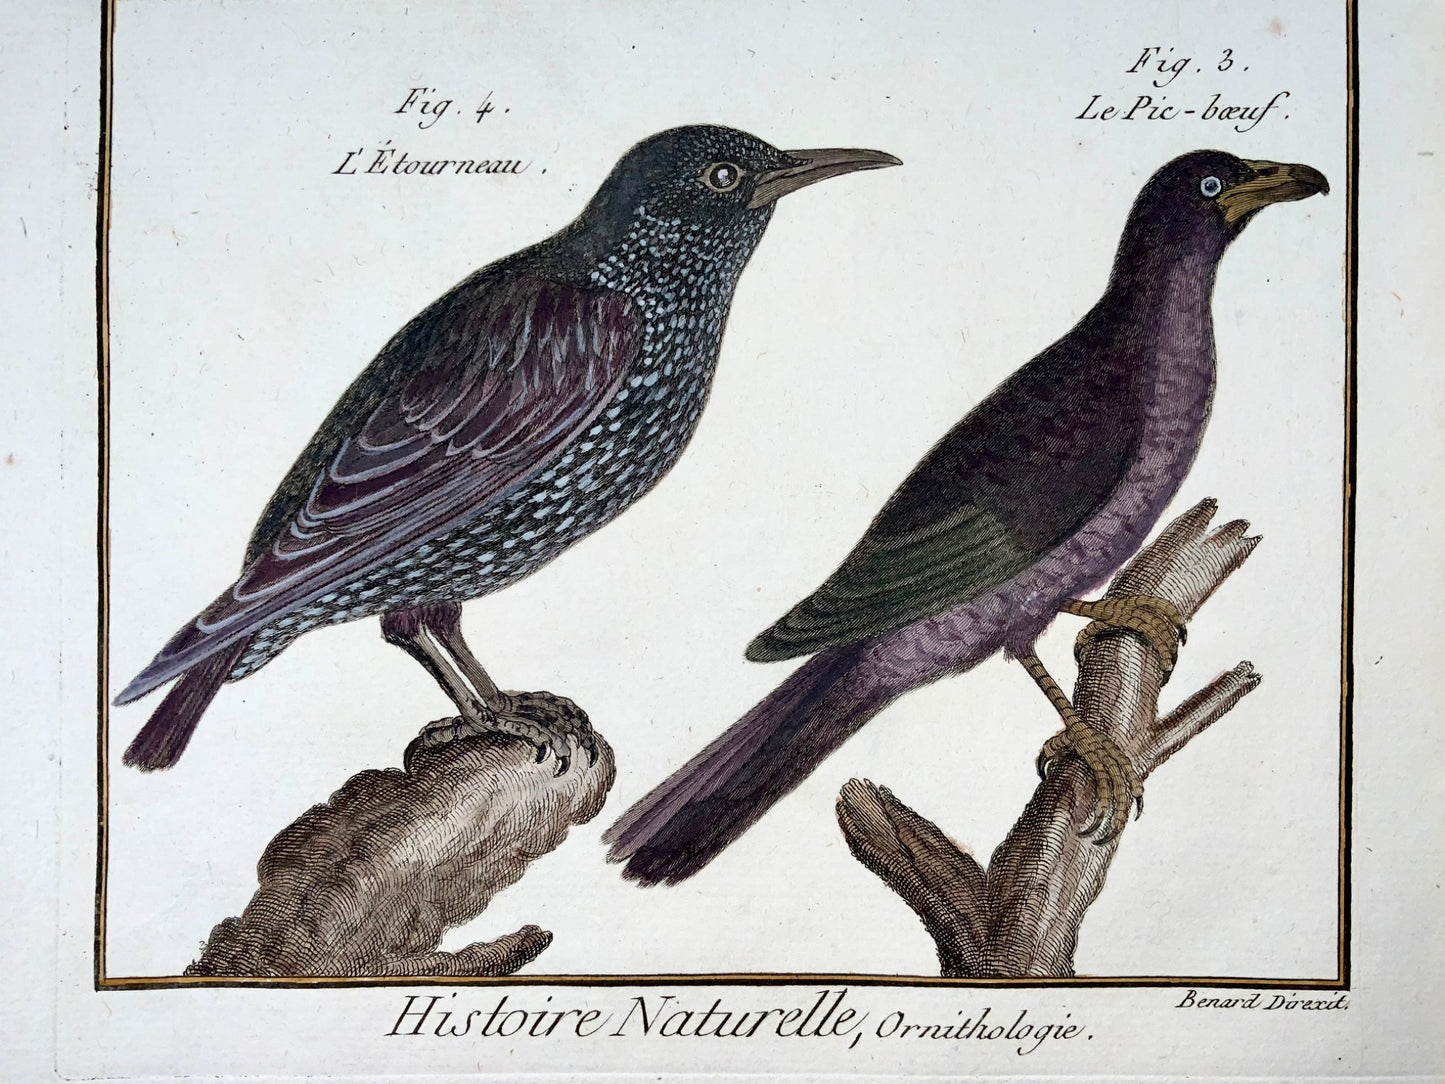 1789 Starling, Nuthatch, Benard sc. quarto, hand colour, engraving, ornithology